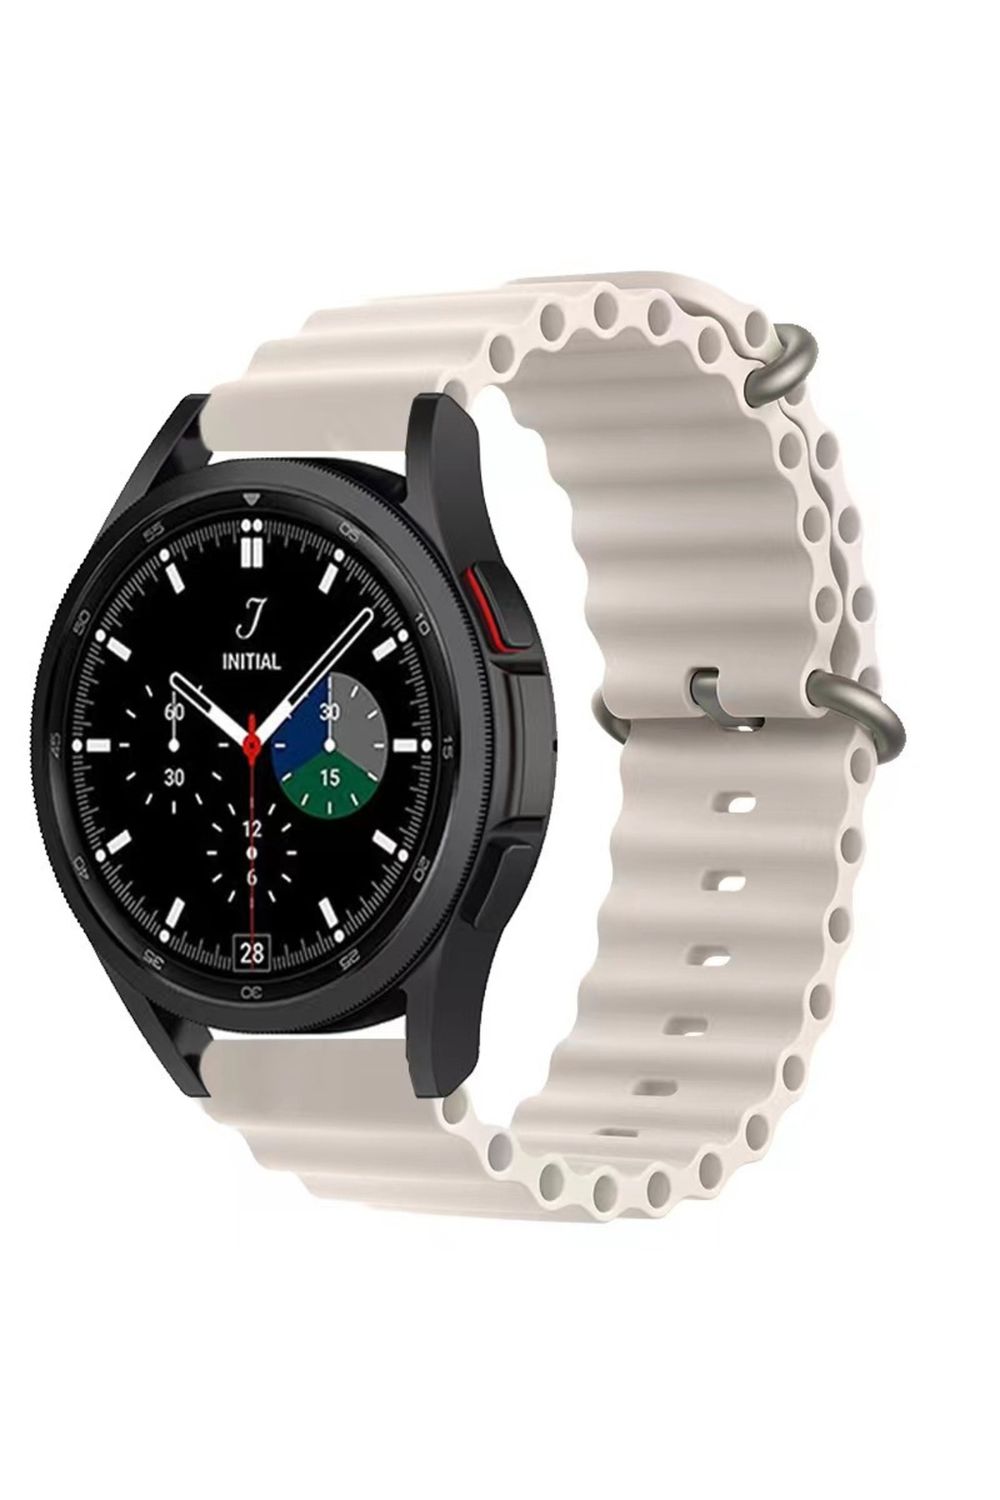 CONOCER Huawei Watch Gt4 46mm Gt3 Se Gt3 Pro Gt2 Pro Xiaomi Mi Watch S1  Compatible Mesh Woven Band Strap - Trendyol